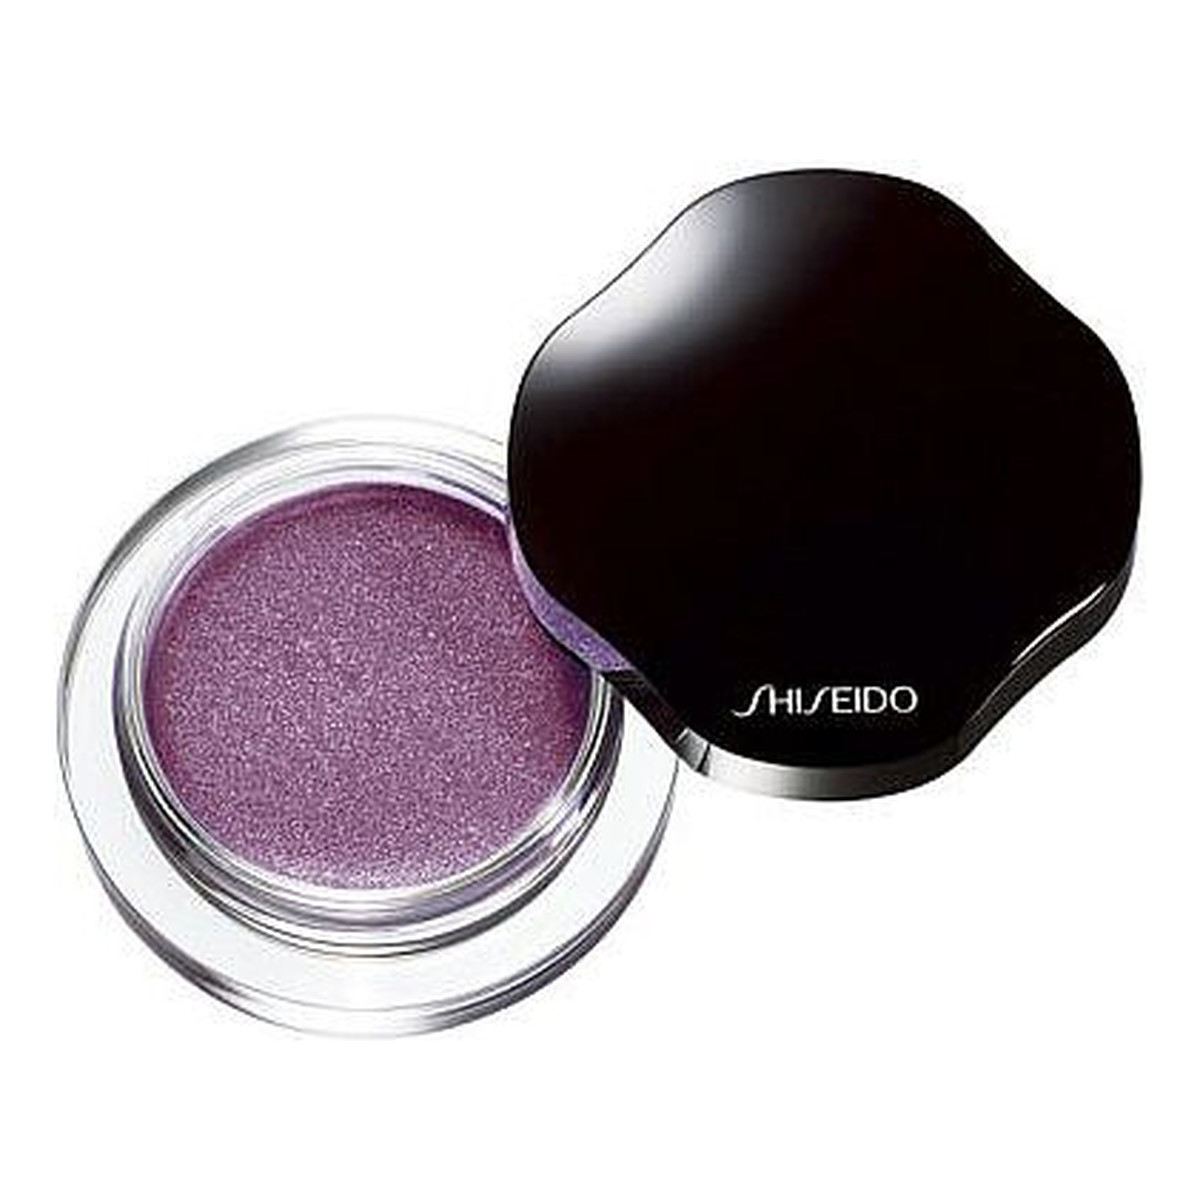 Shiseido Shimmering Cream Eye Color Kremowy cień do powiek 6g